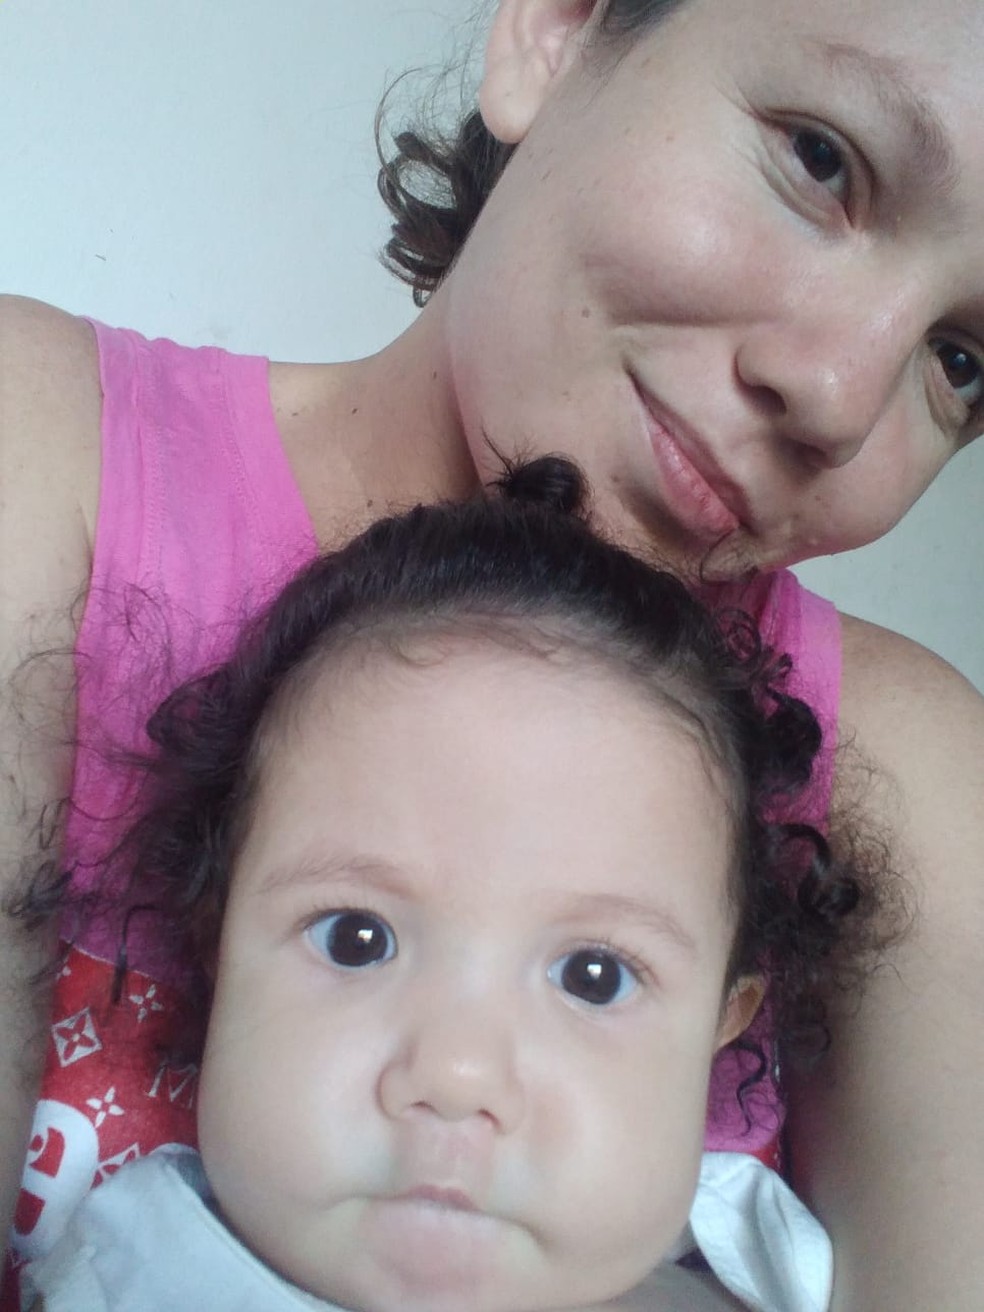 Nathalia busca cirurgia cardiológica para a filha Laura, de 9 meses, desde o dia 4 de novembro no RN — Foto: Cedida